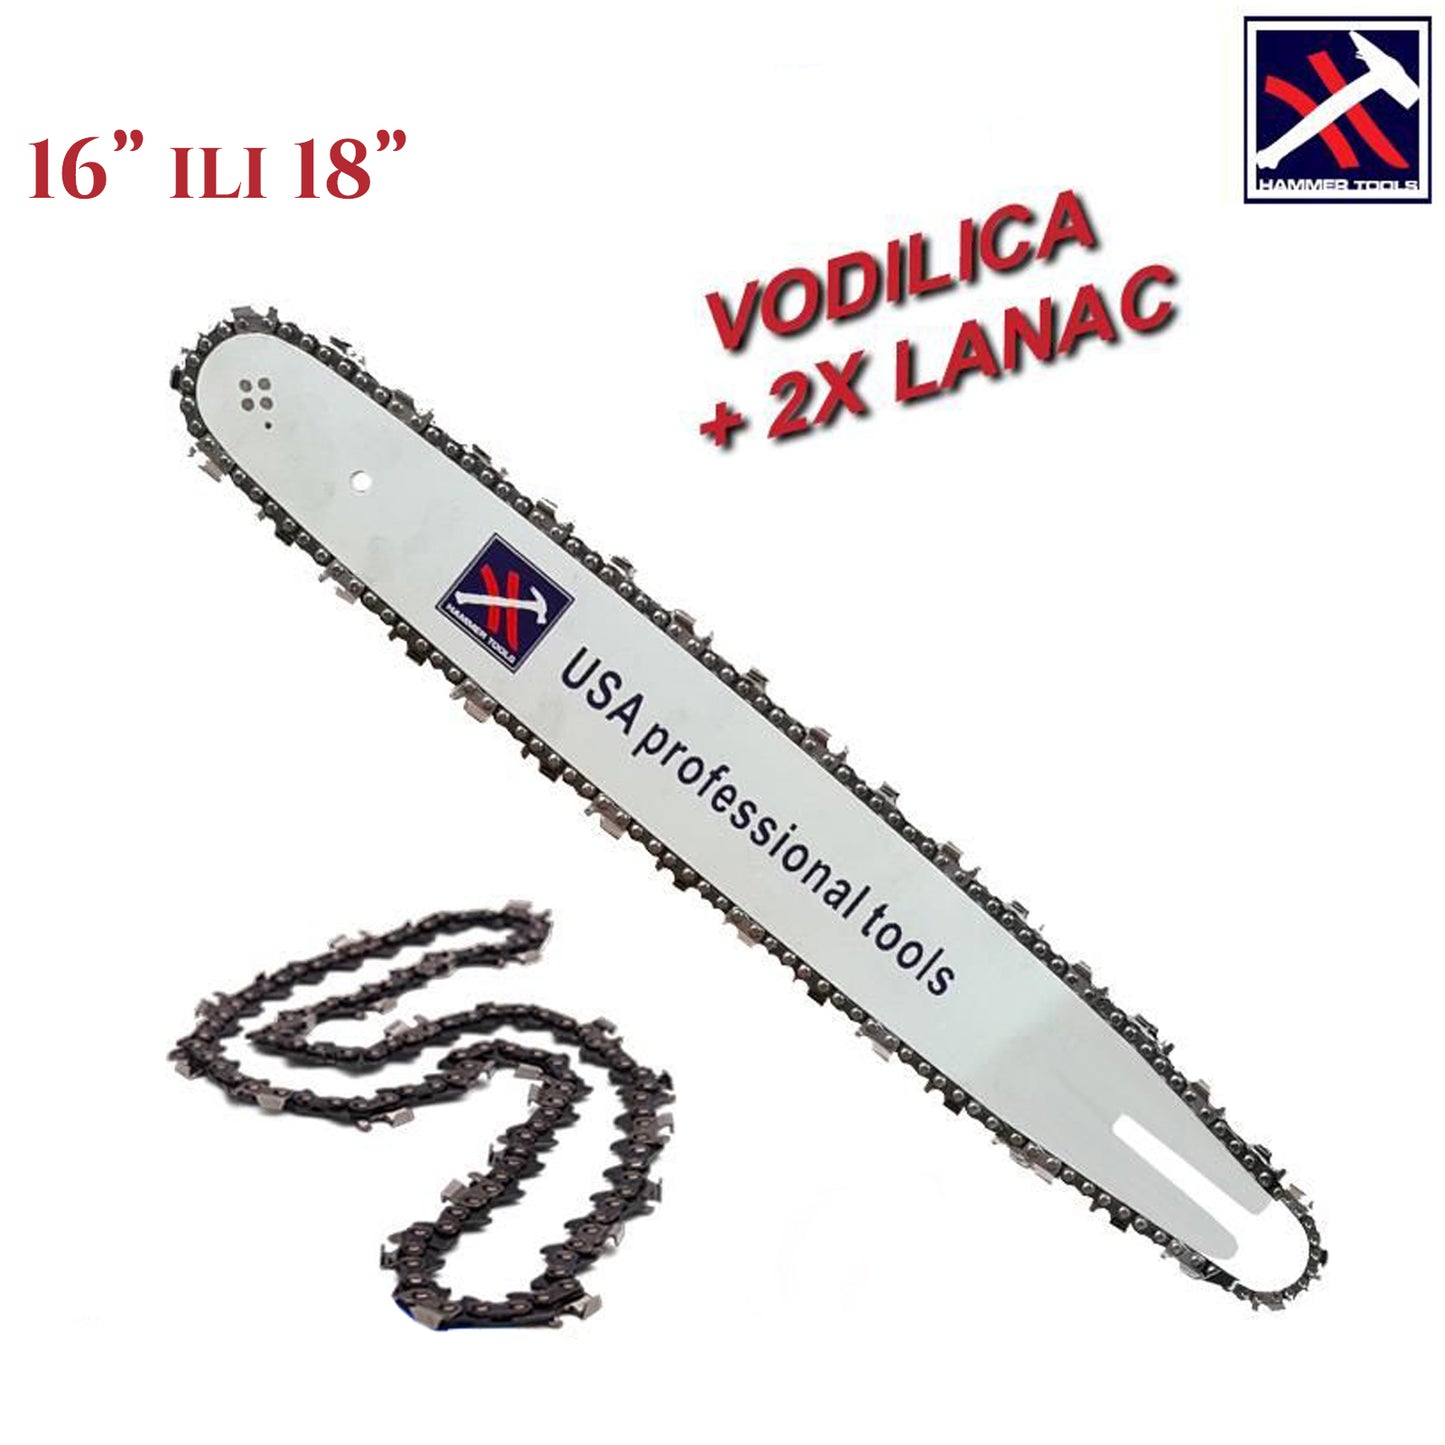 Vodilica + 2x  Lanac Hammer Tools